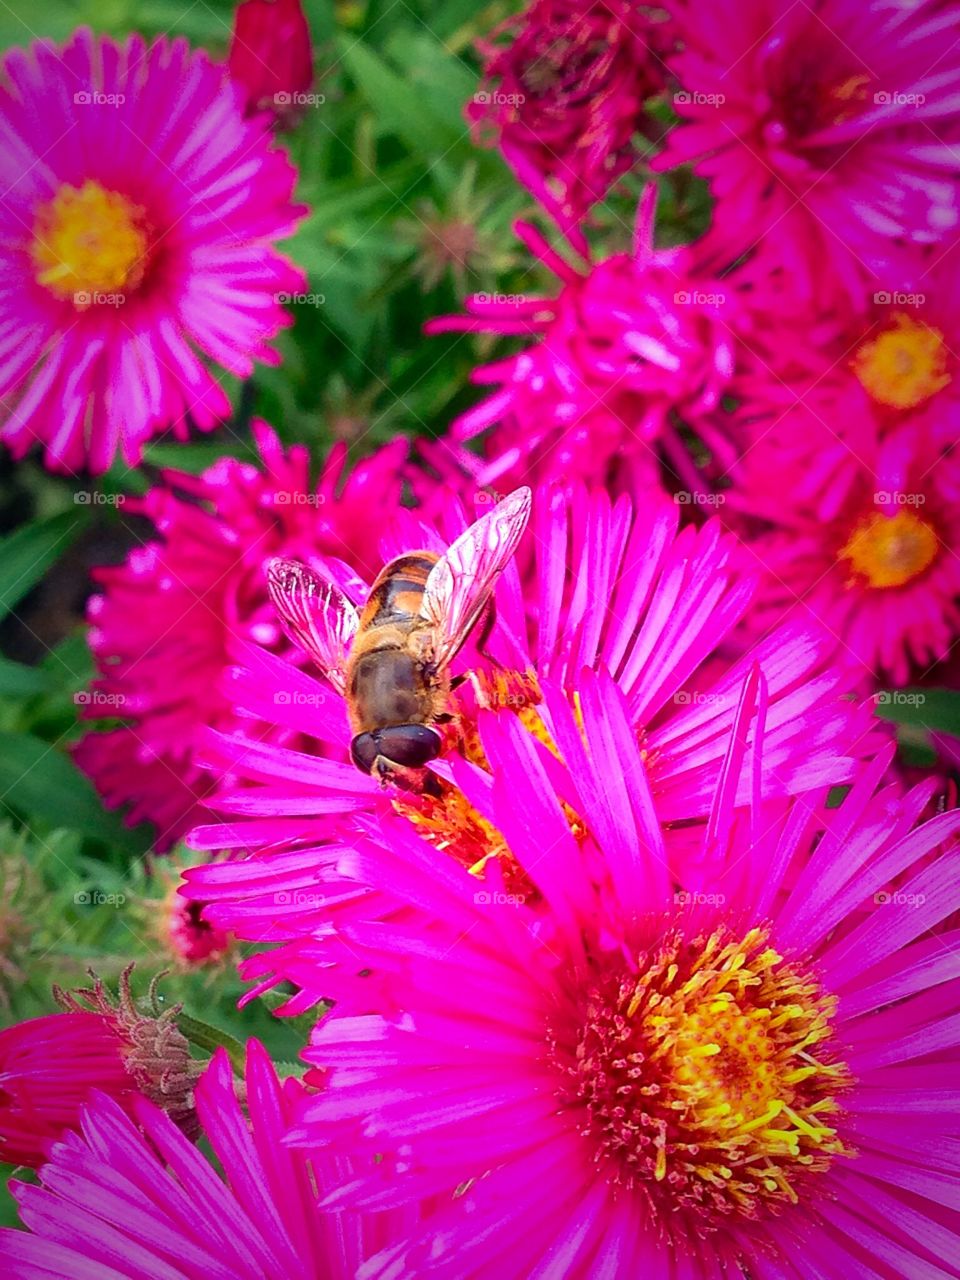 English honey bee collecting pollen 